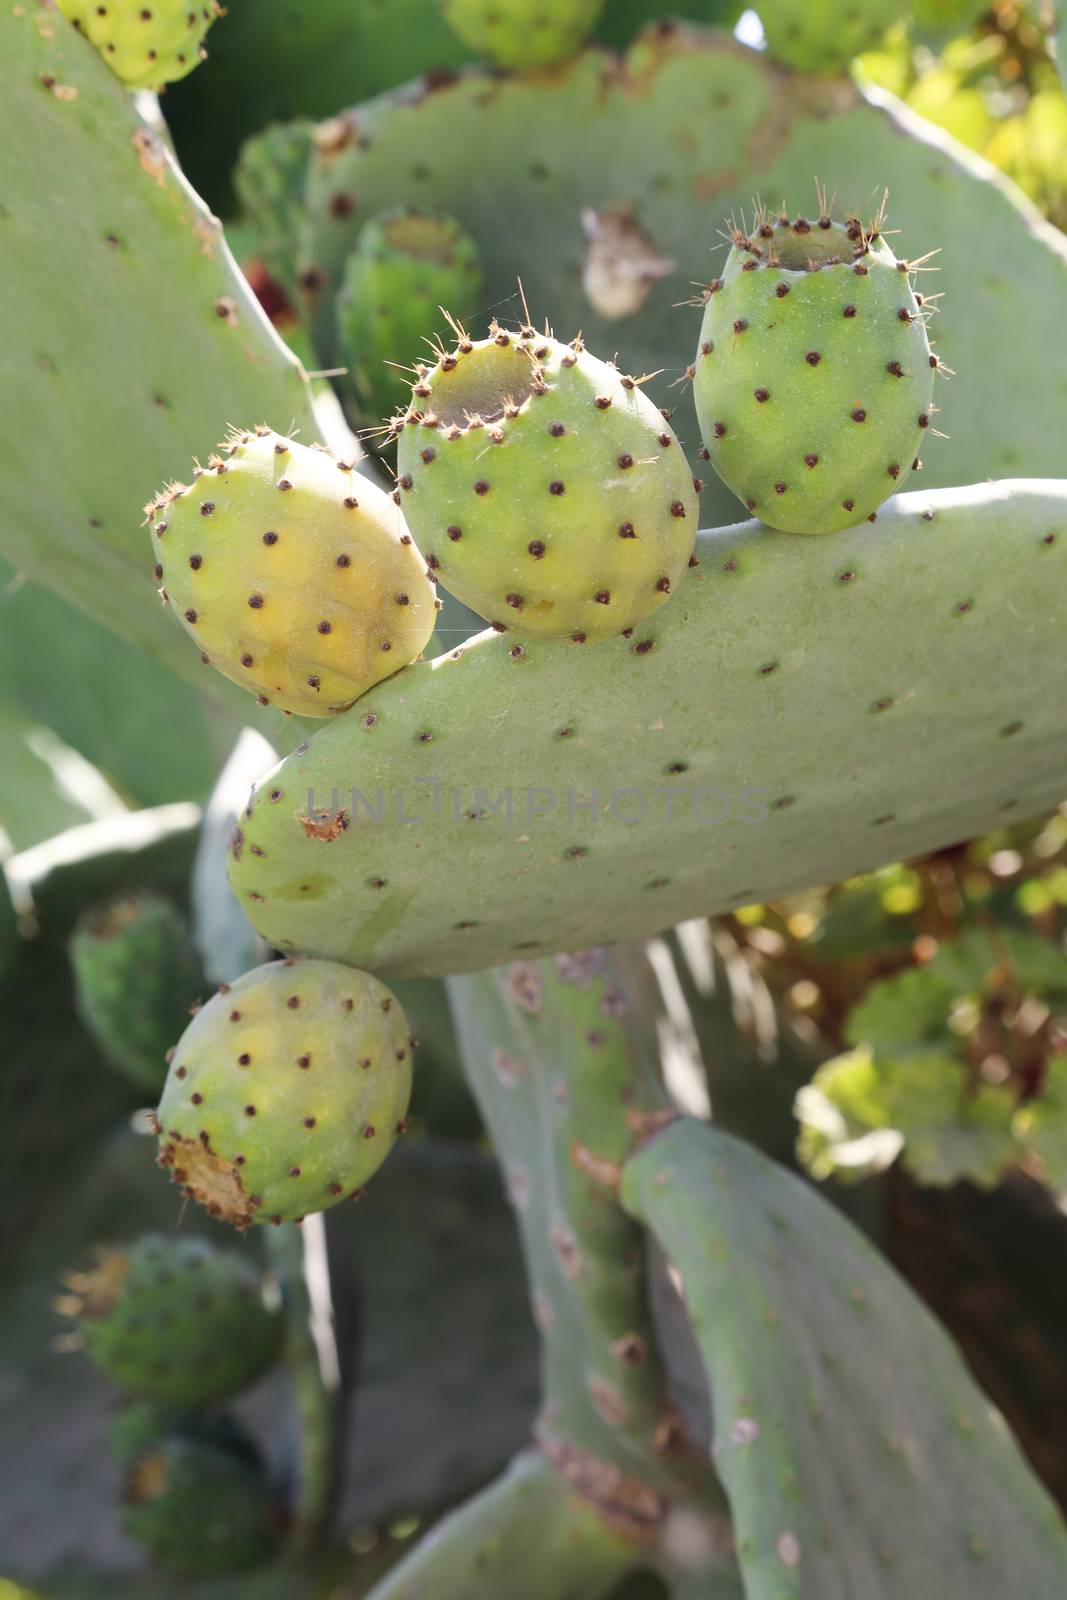 The pear fruit on a tuna cactus